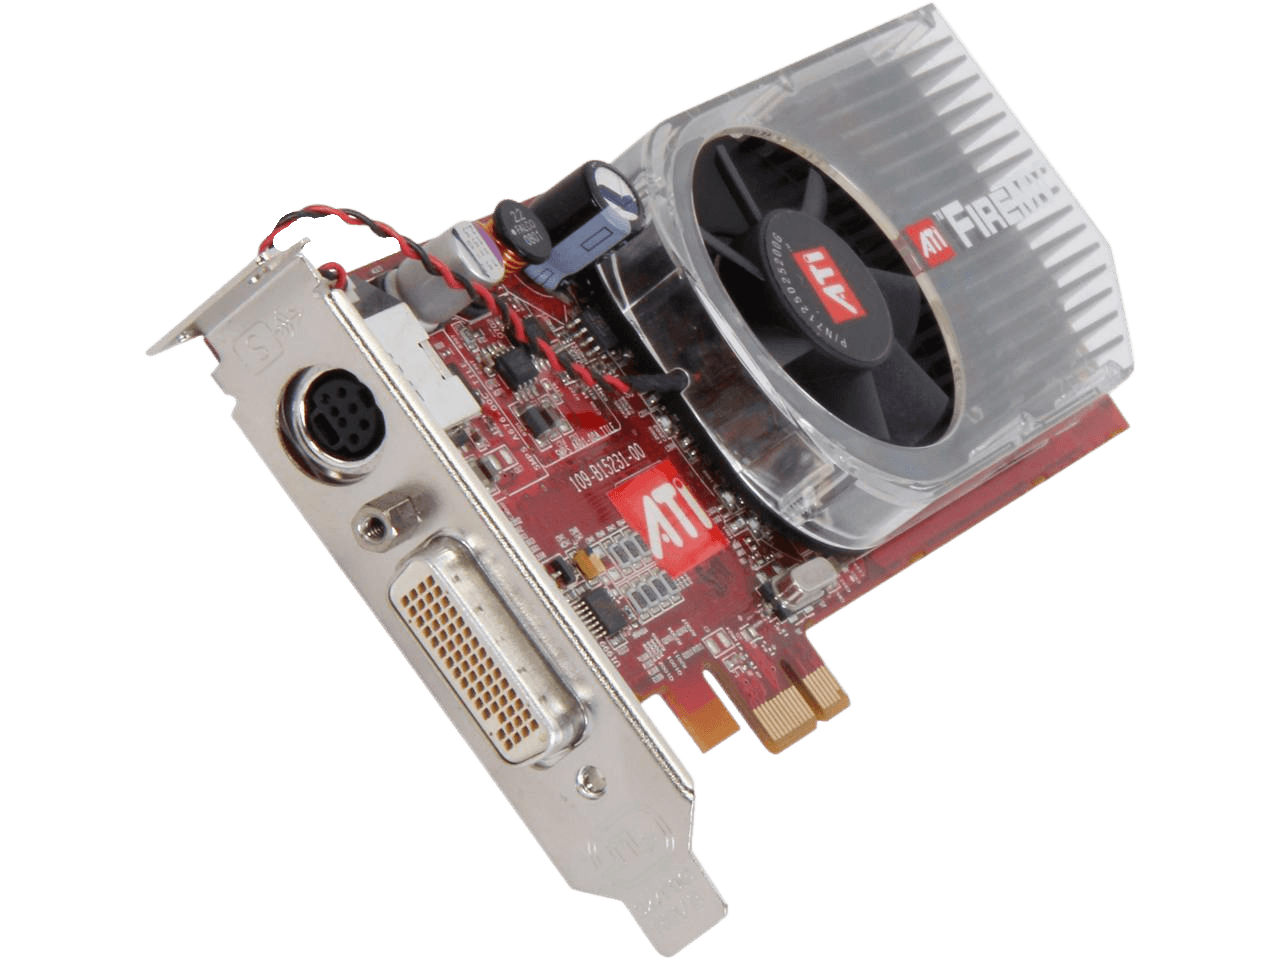 AMD ATI FireMV 2250 VIDEO-MV-2250-1X 256MB DDR2 PCI Express x1 Low Profile Workstation Video Card